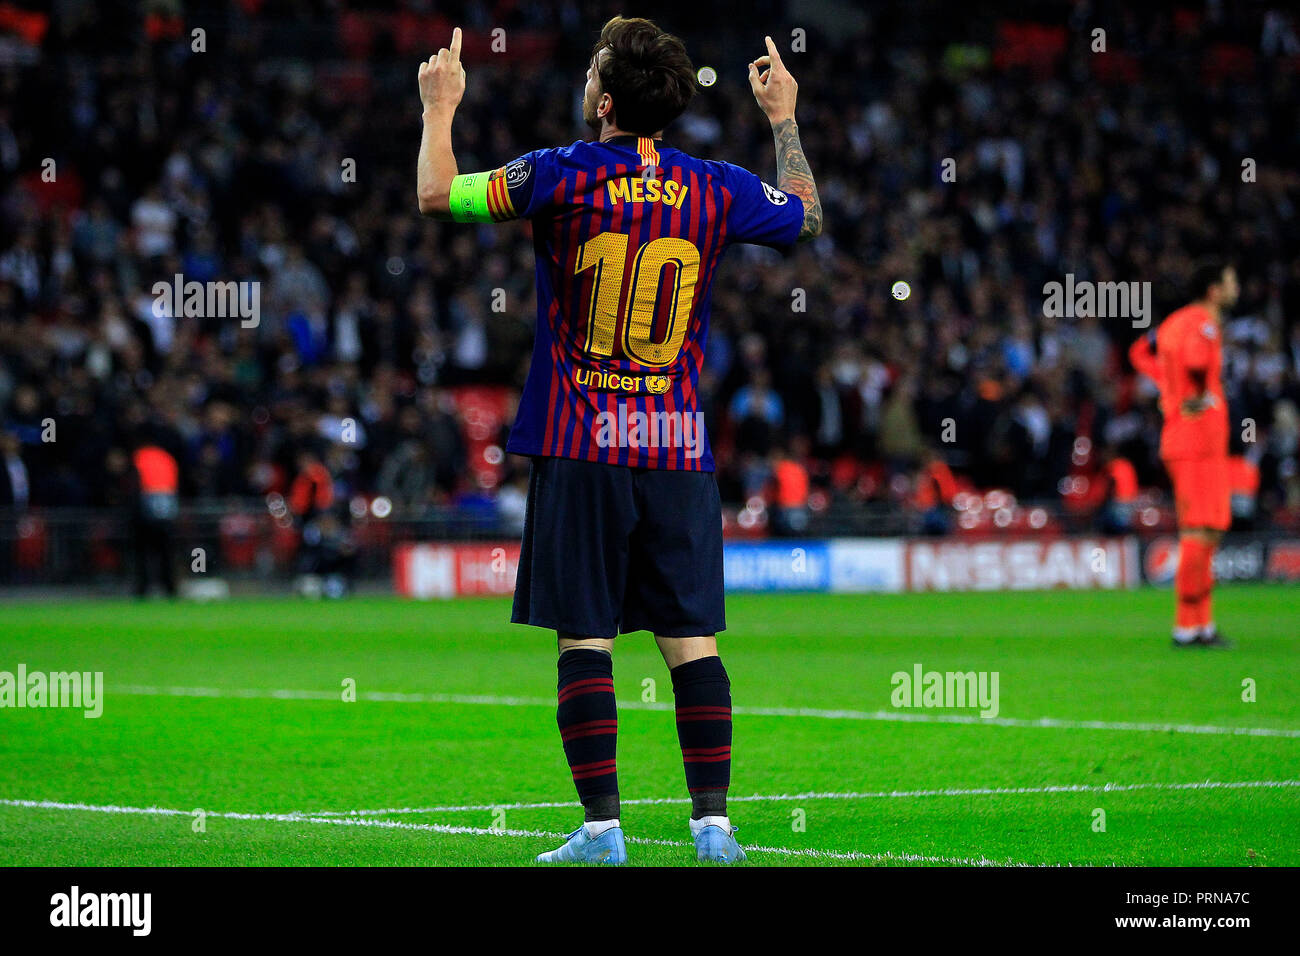 Lionel messi barcelona champions league e imágenes de alta resolución Alamy